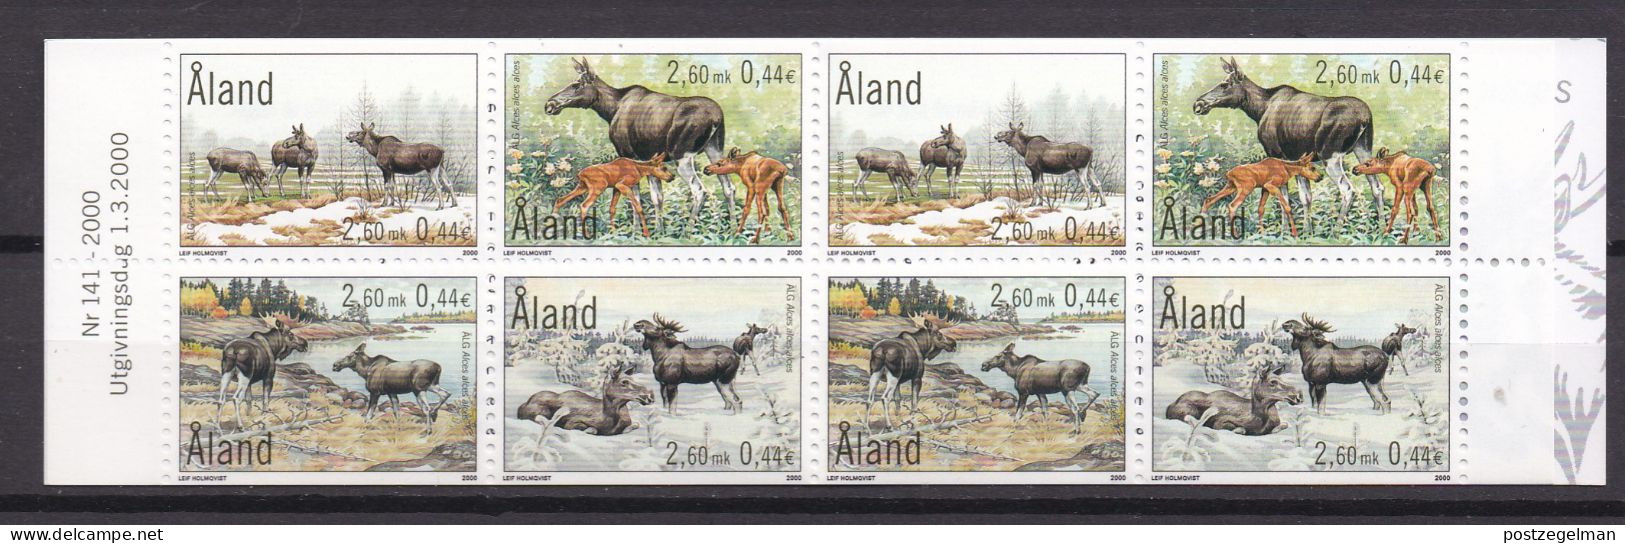 ALAND, 2000, Mint Stamp(s)  In Post Book, Big Animals, Michel Nr(s). 171-174, Scannr. F3320 - Ålandinseln